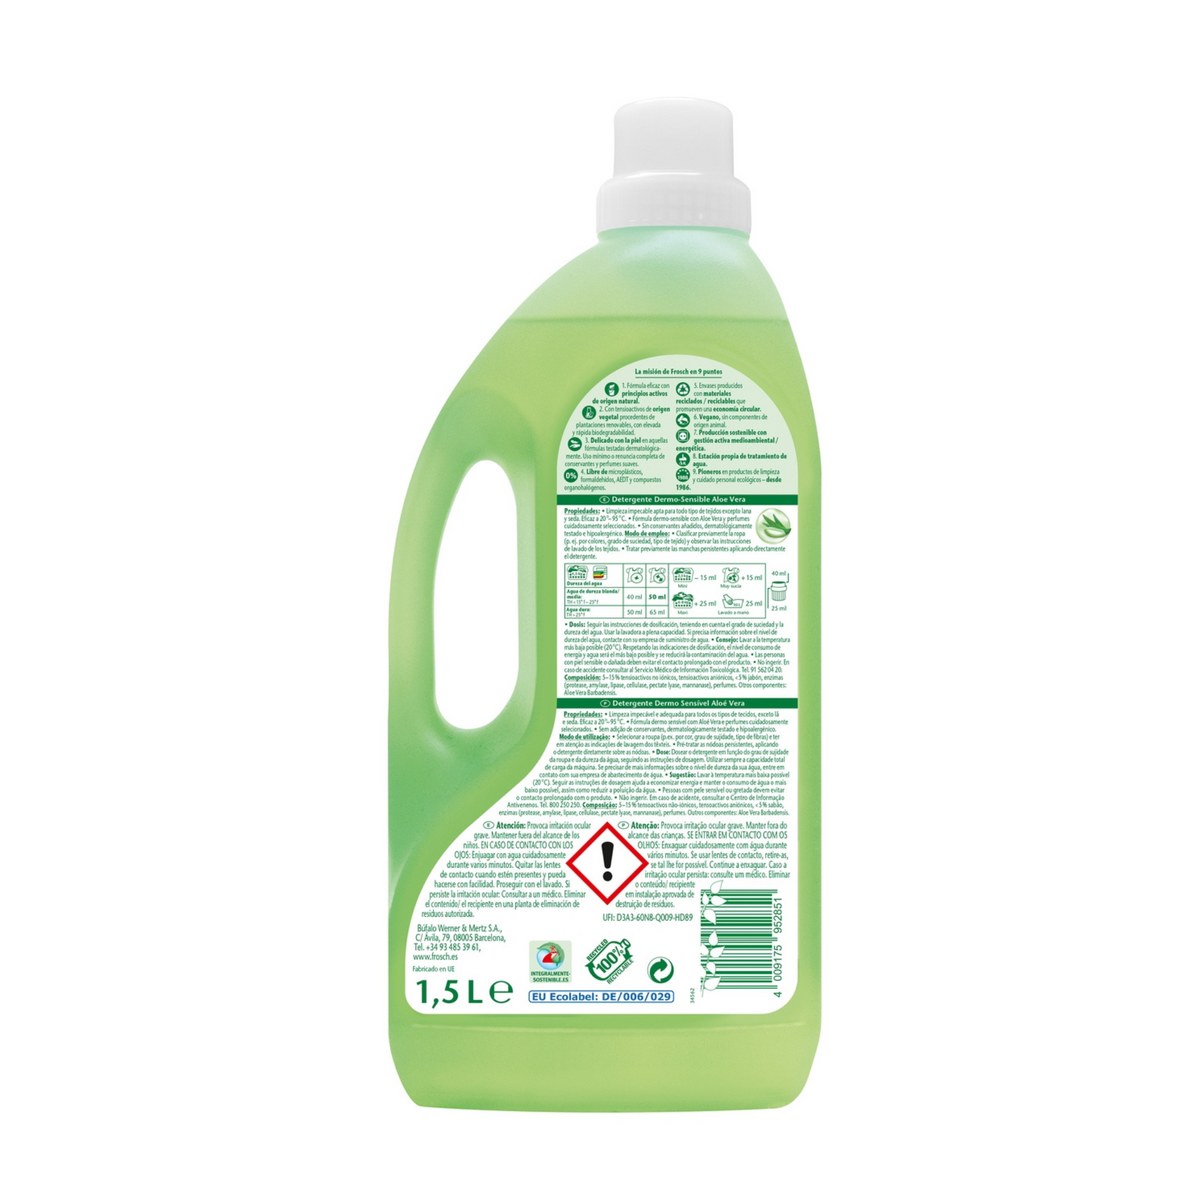 Frosch Sensitive Aloe Vera Laundry Detergent (1.5 L) #10085901